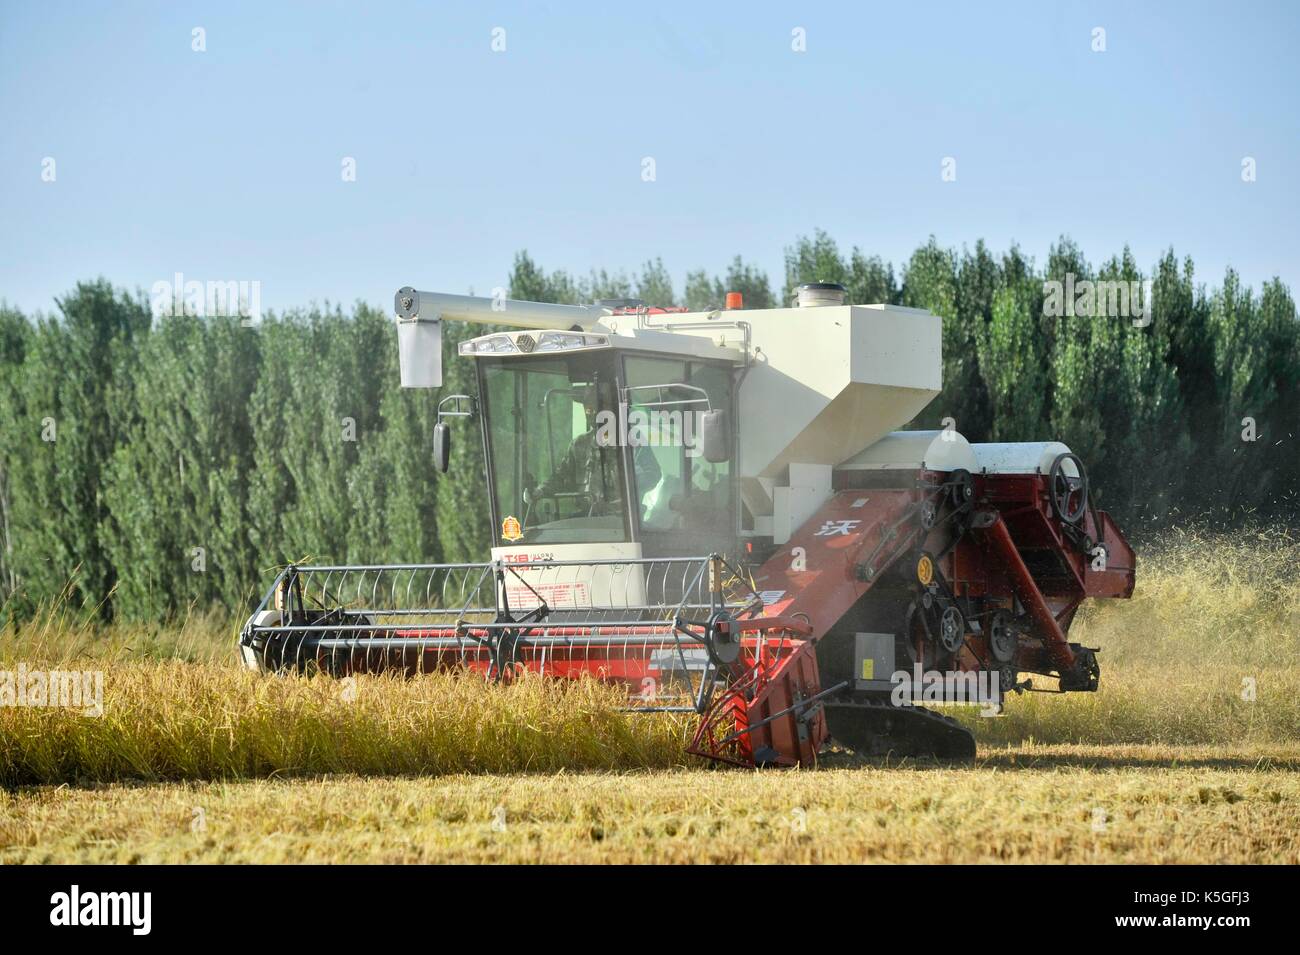 Ili, China's Xinjiang Uygur Autonomous Region. 8th Sep, 2017. A harvester works on an organic rice field in Ili Kazakh Autonomous Prefecture, northwest China's Xinjiang Uygur Autonomous Region, Sept. 8, 2017. Credit: Hu Huhu/Xinhua/Alamy Live News Stock Photo